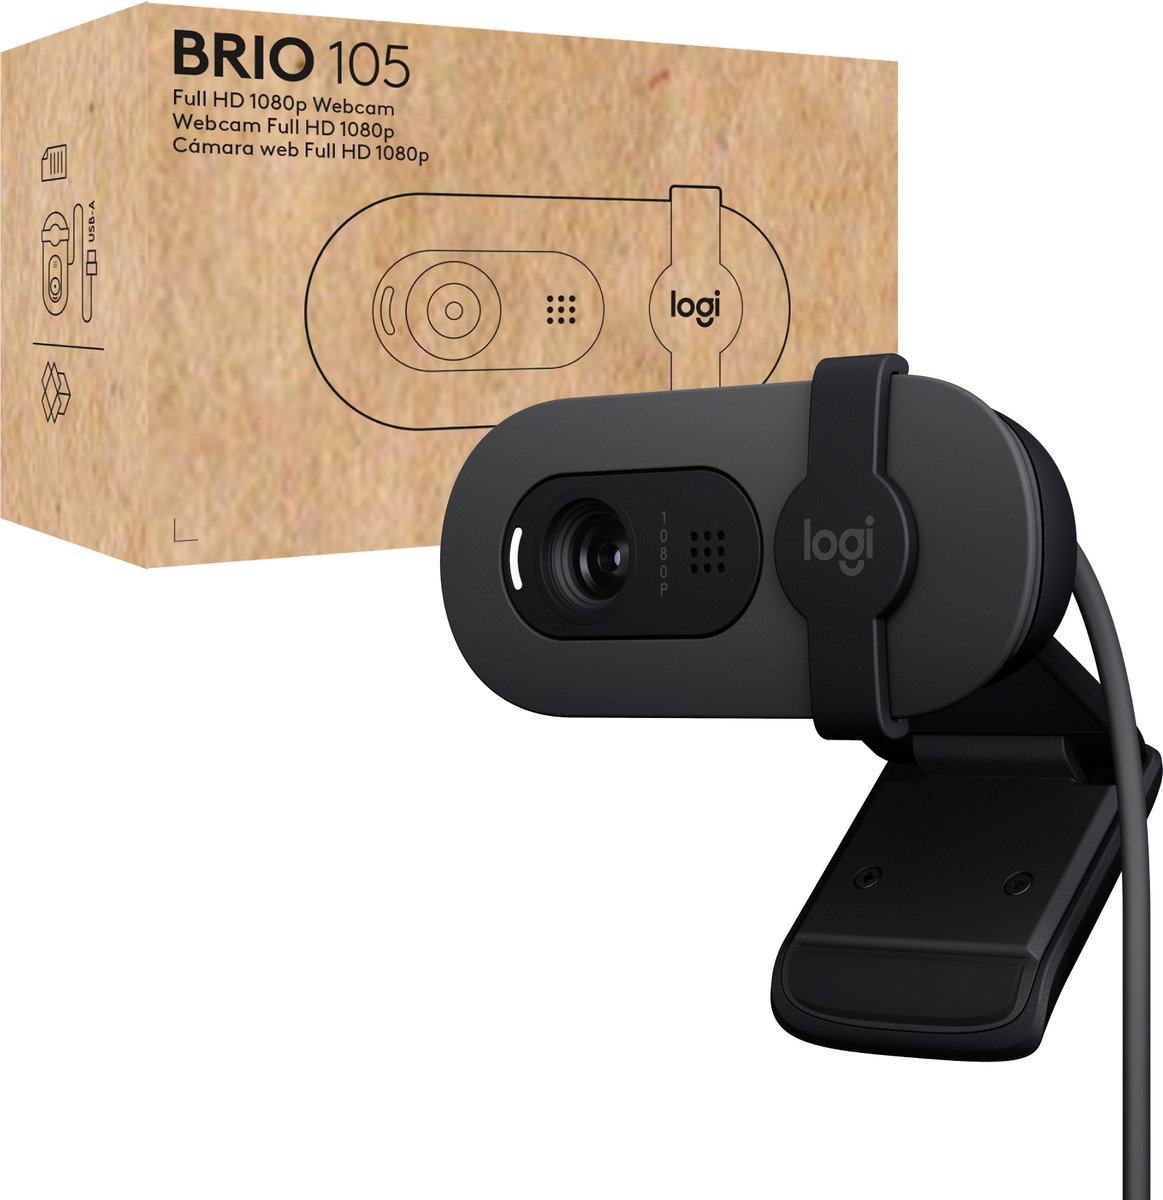 WEBCAM - Brio 105 Full HD 1080p Webcam - GRAPHITE - USB - N/A - EMEA28-935